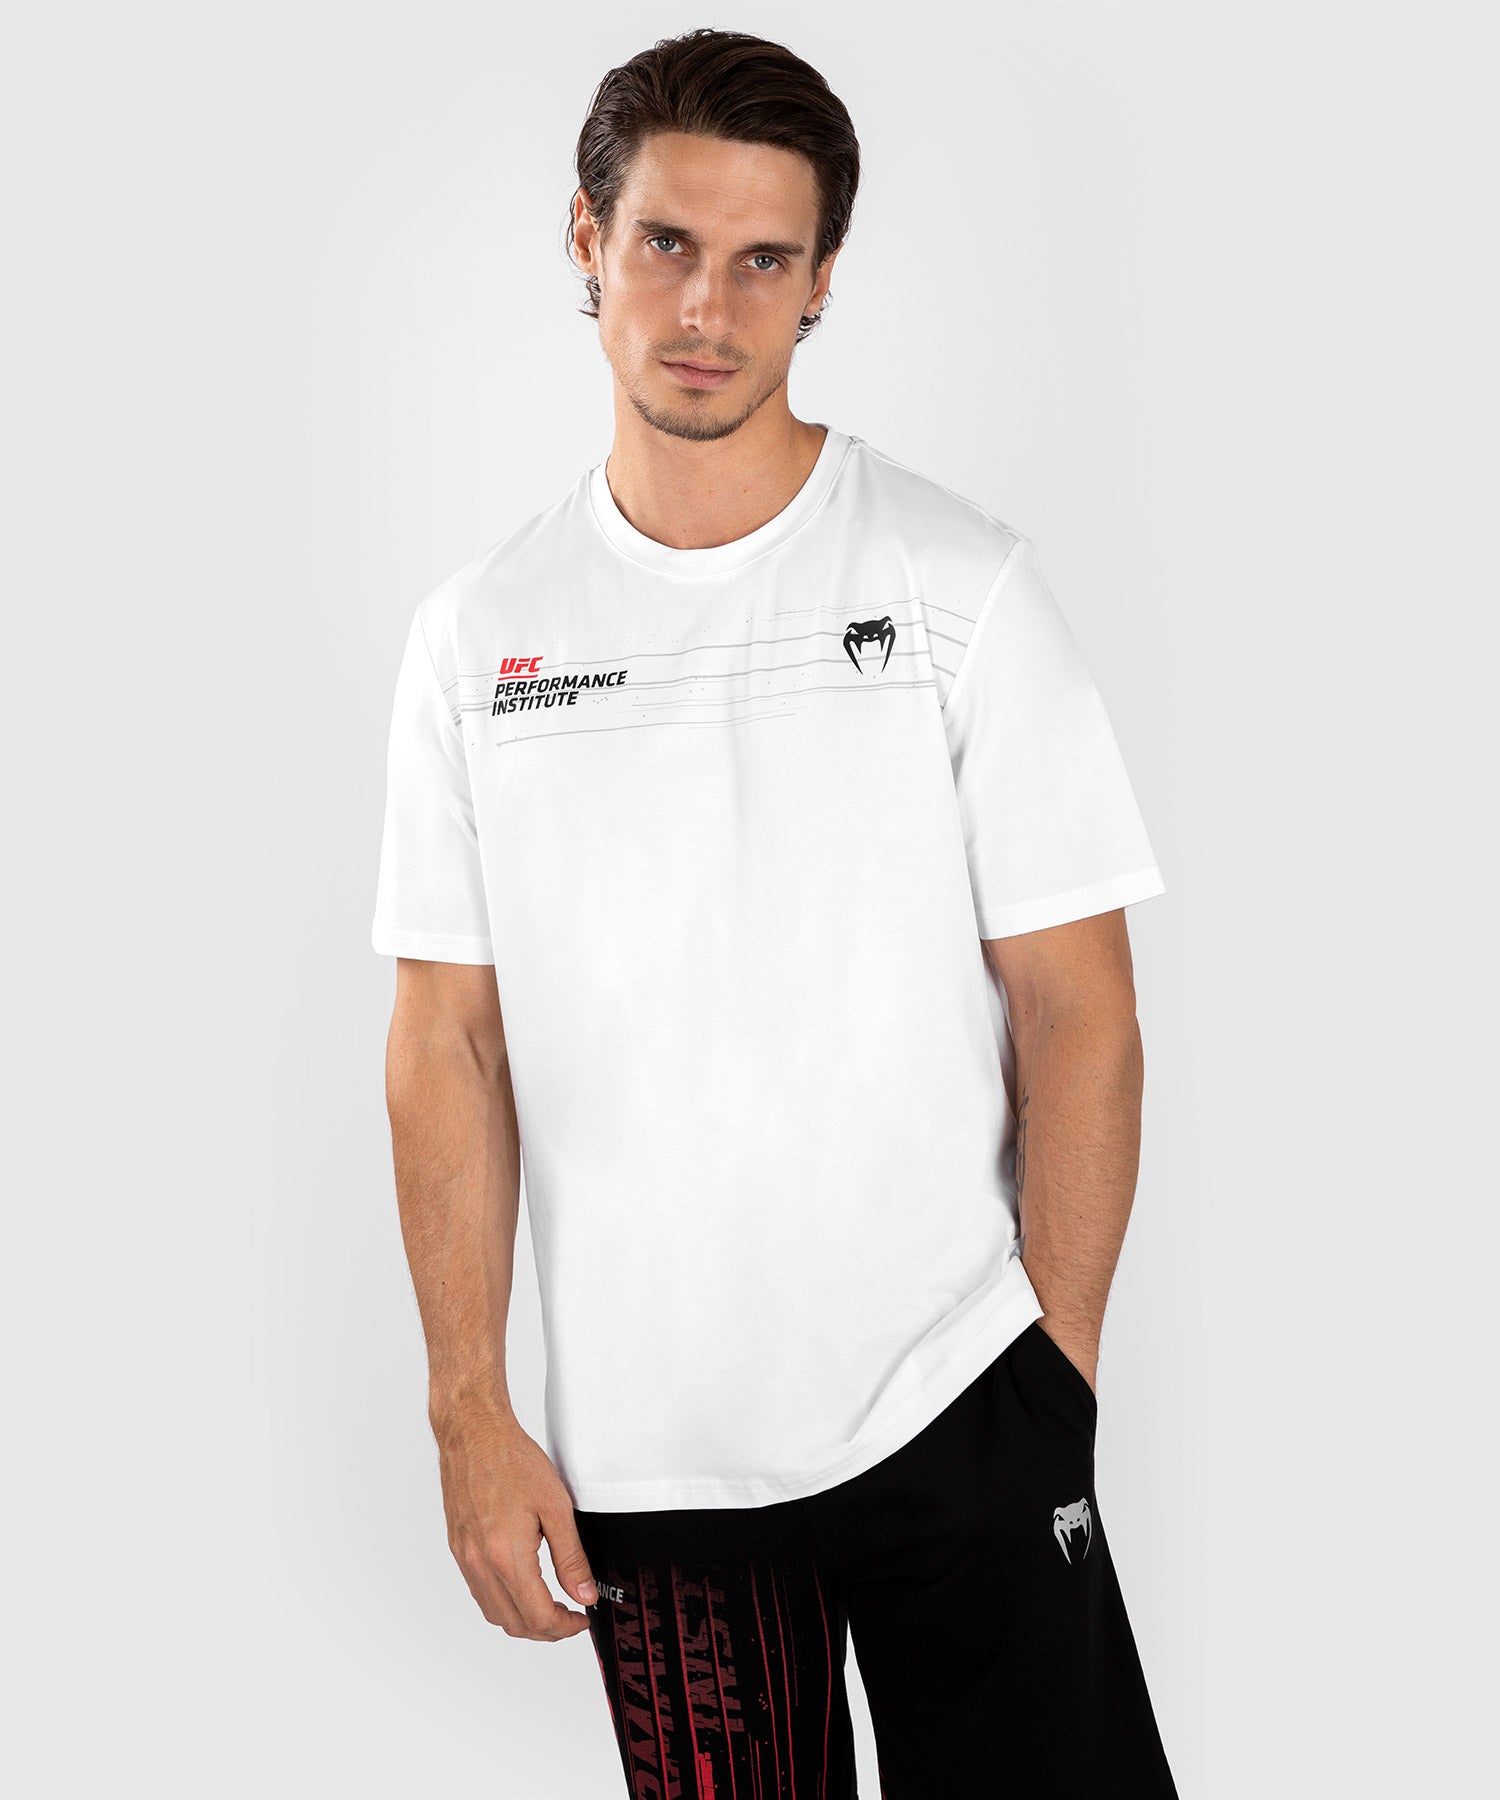 T-shirt Blanc Adidas - Homme